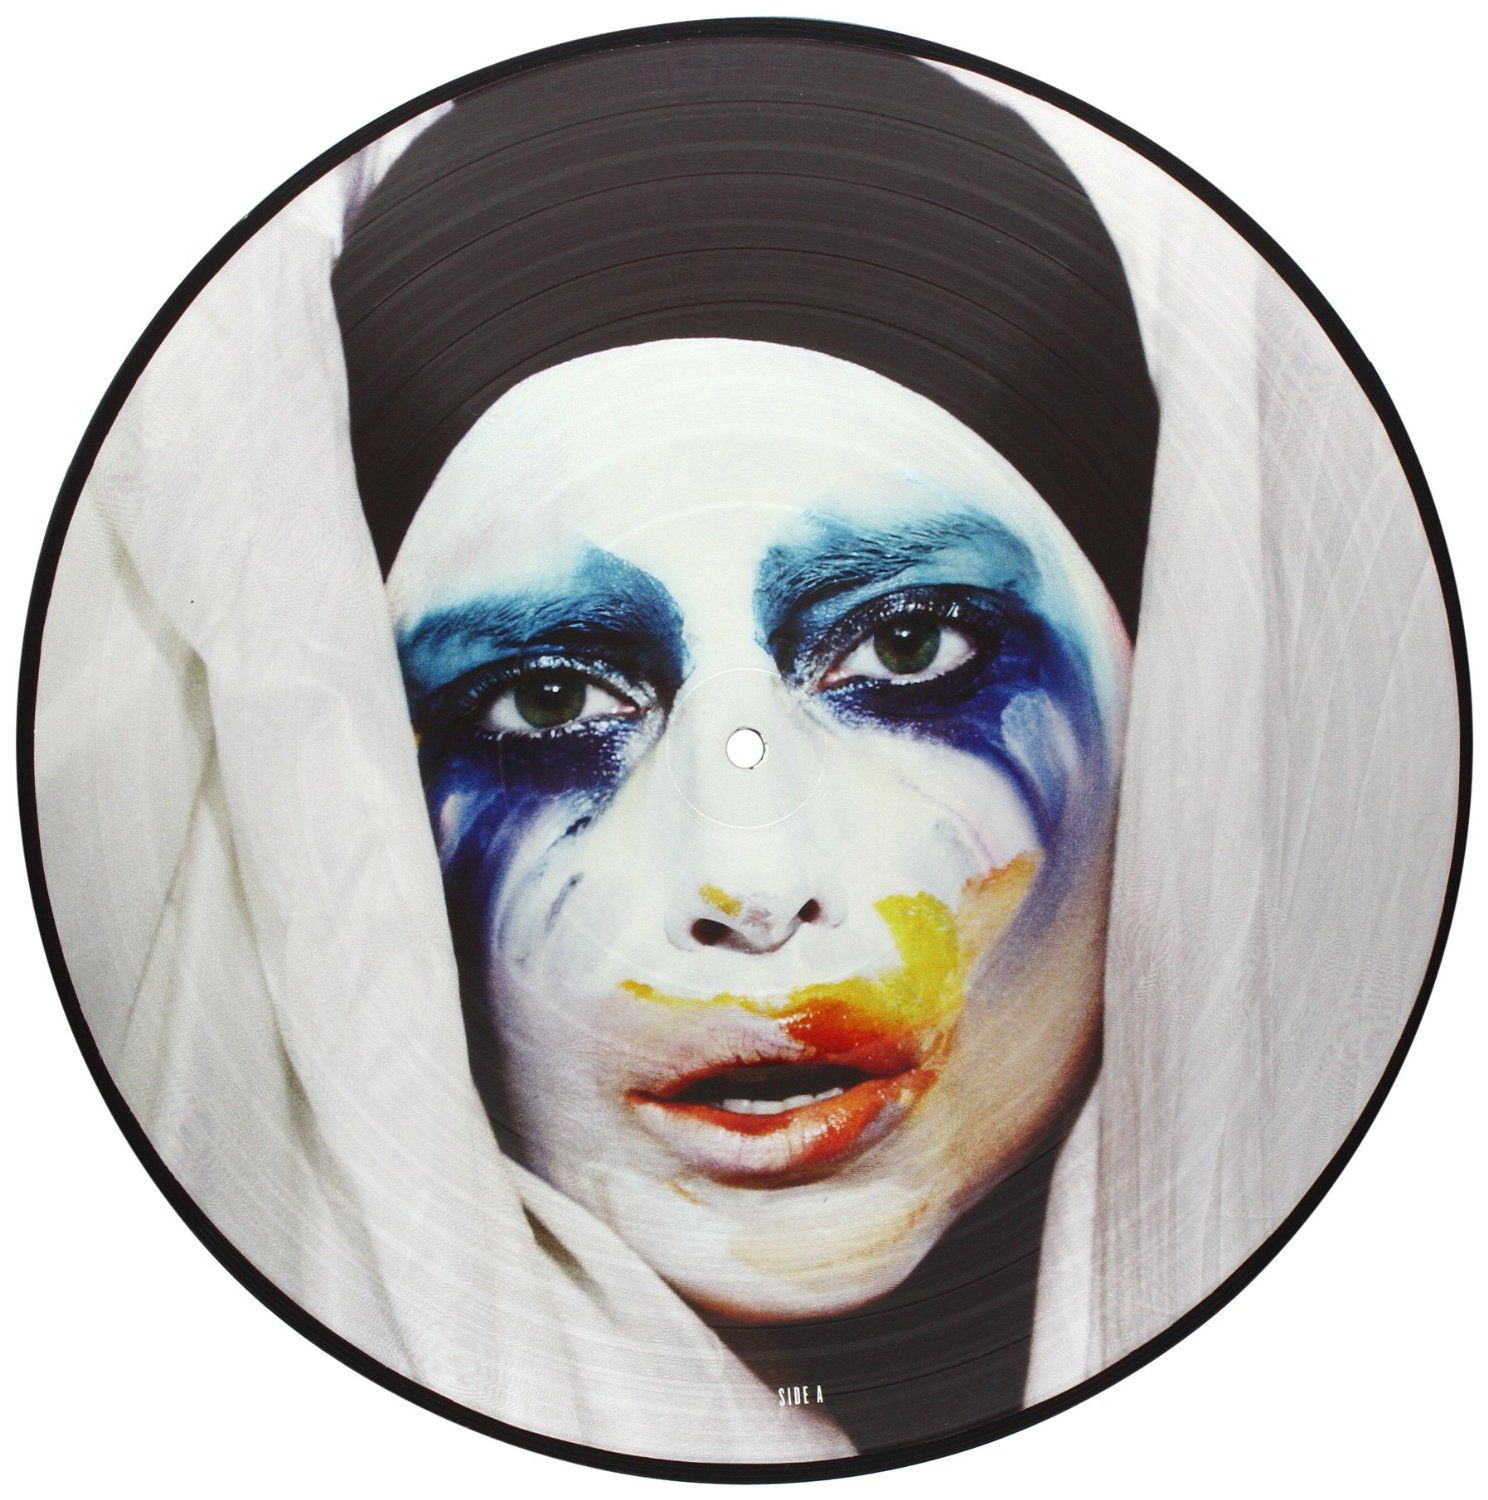 Applause леди гага. Леди Гага Аплаус. Lady Gaga - ARTPOP пластинка. ARTPOP Gaga винил. Леди Гага альбом Applause.